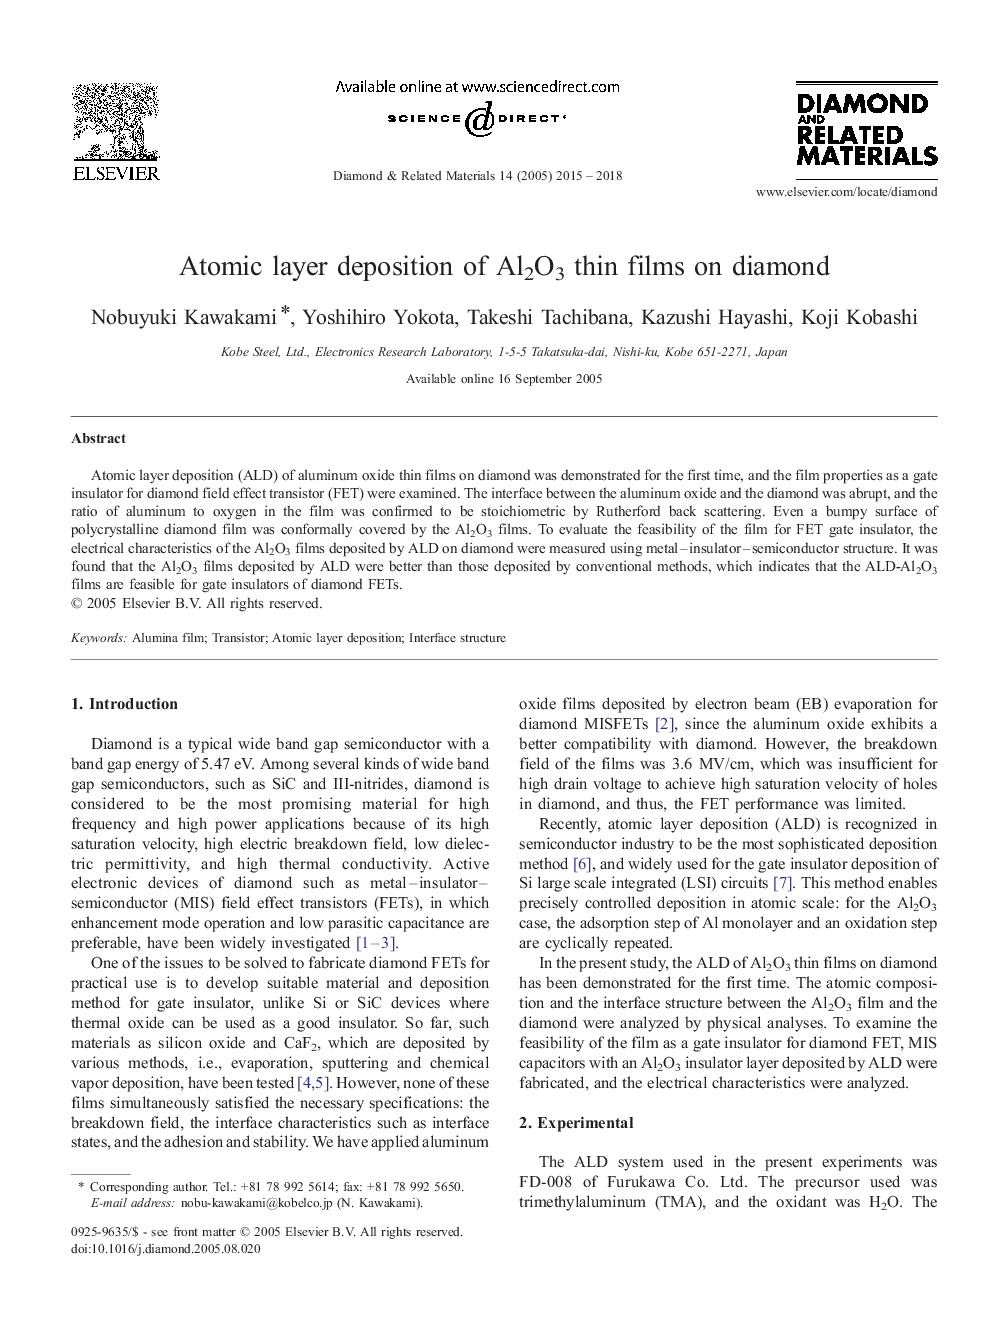 Atomic layer deposition of Al2O3 thin films on diamond